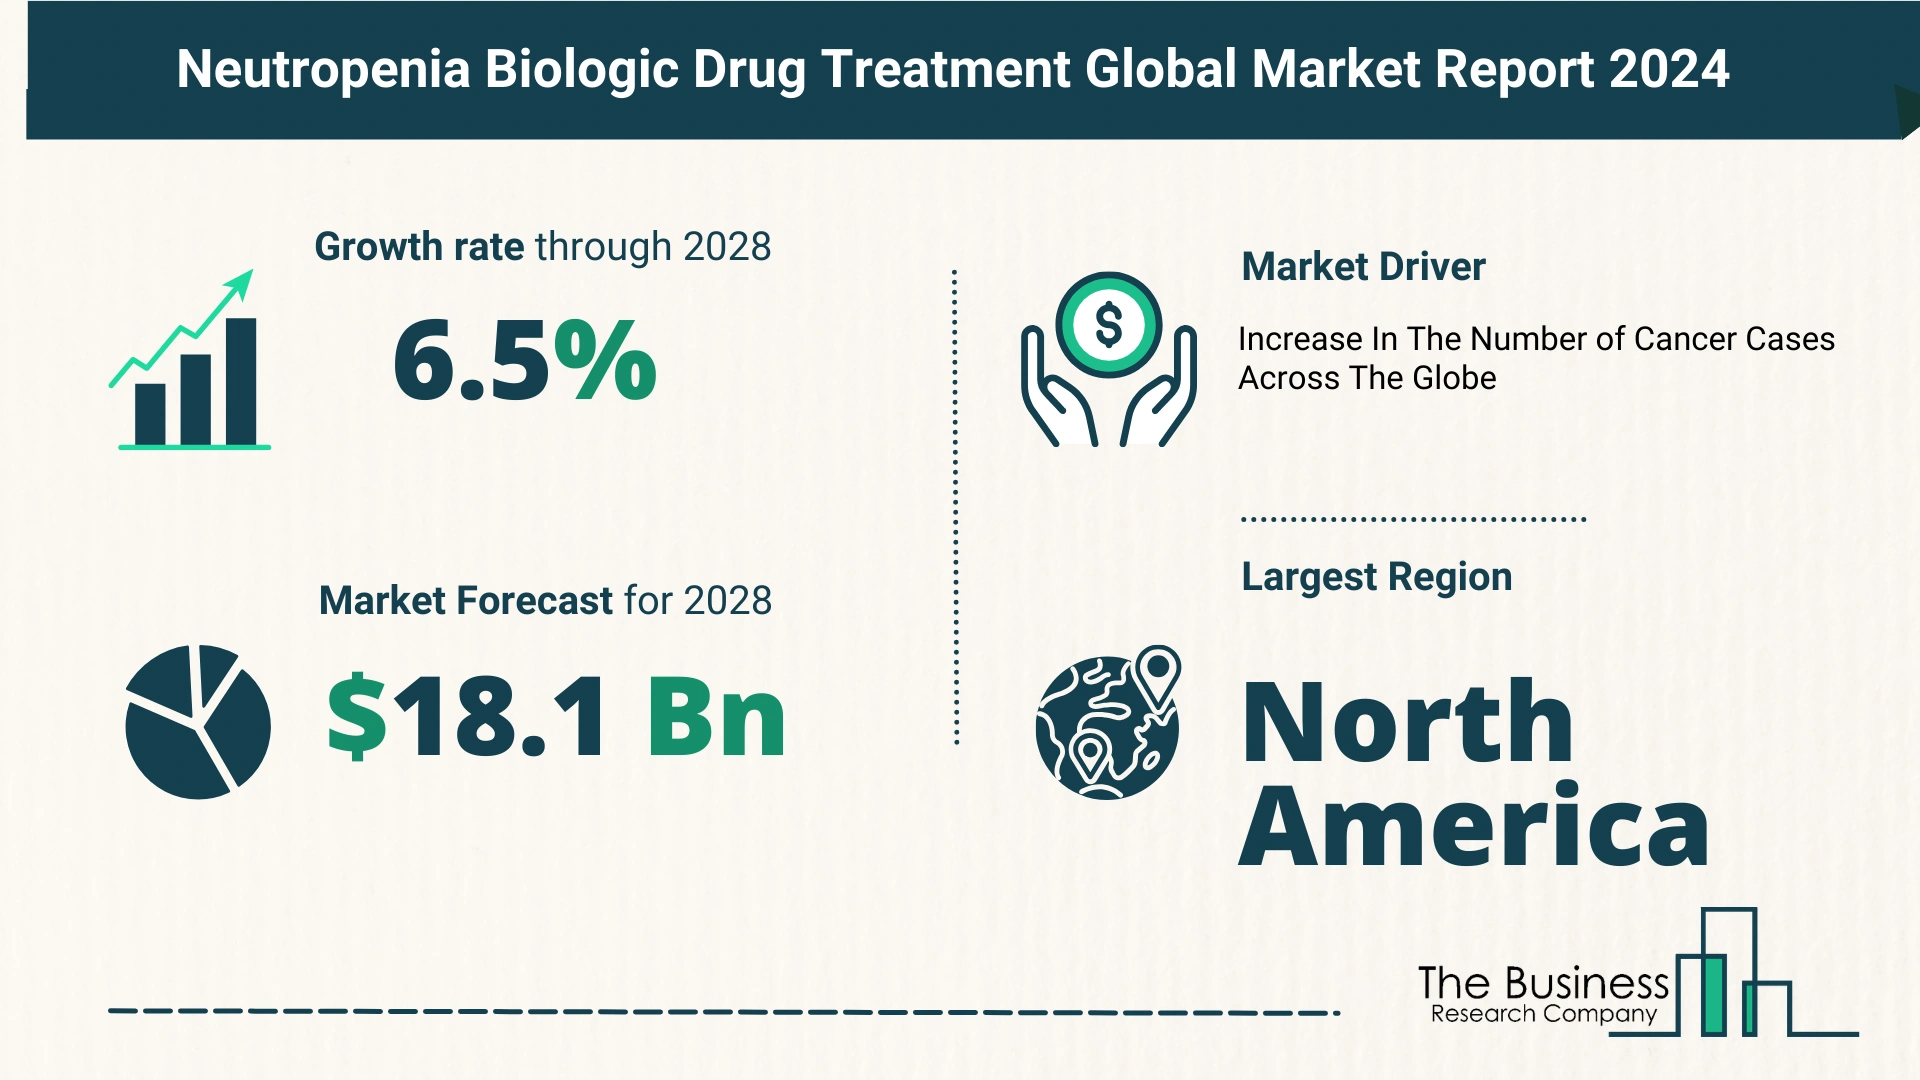 Key Takeaways From The Global Neutropenia Biologic Drug Treatment Market Forecast 2024